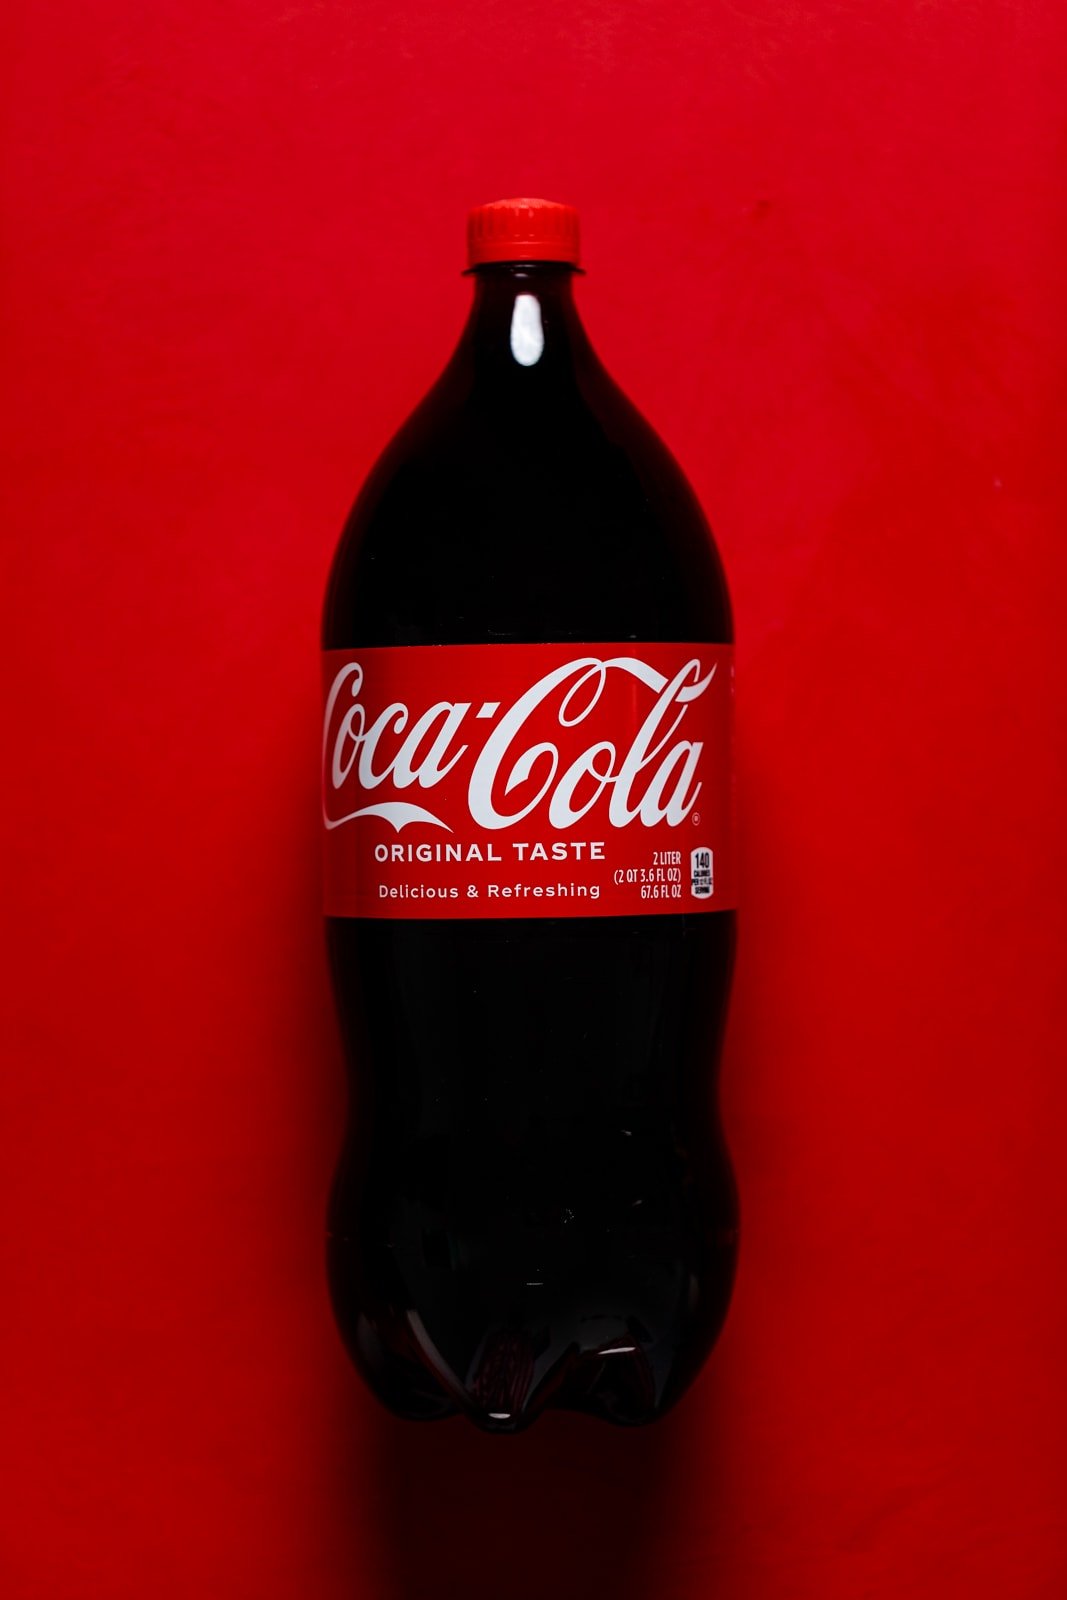 Bottle of Coca-Cola